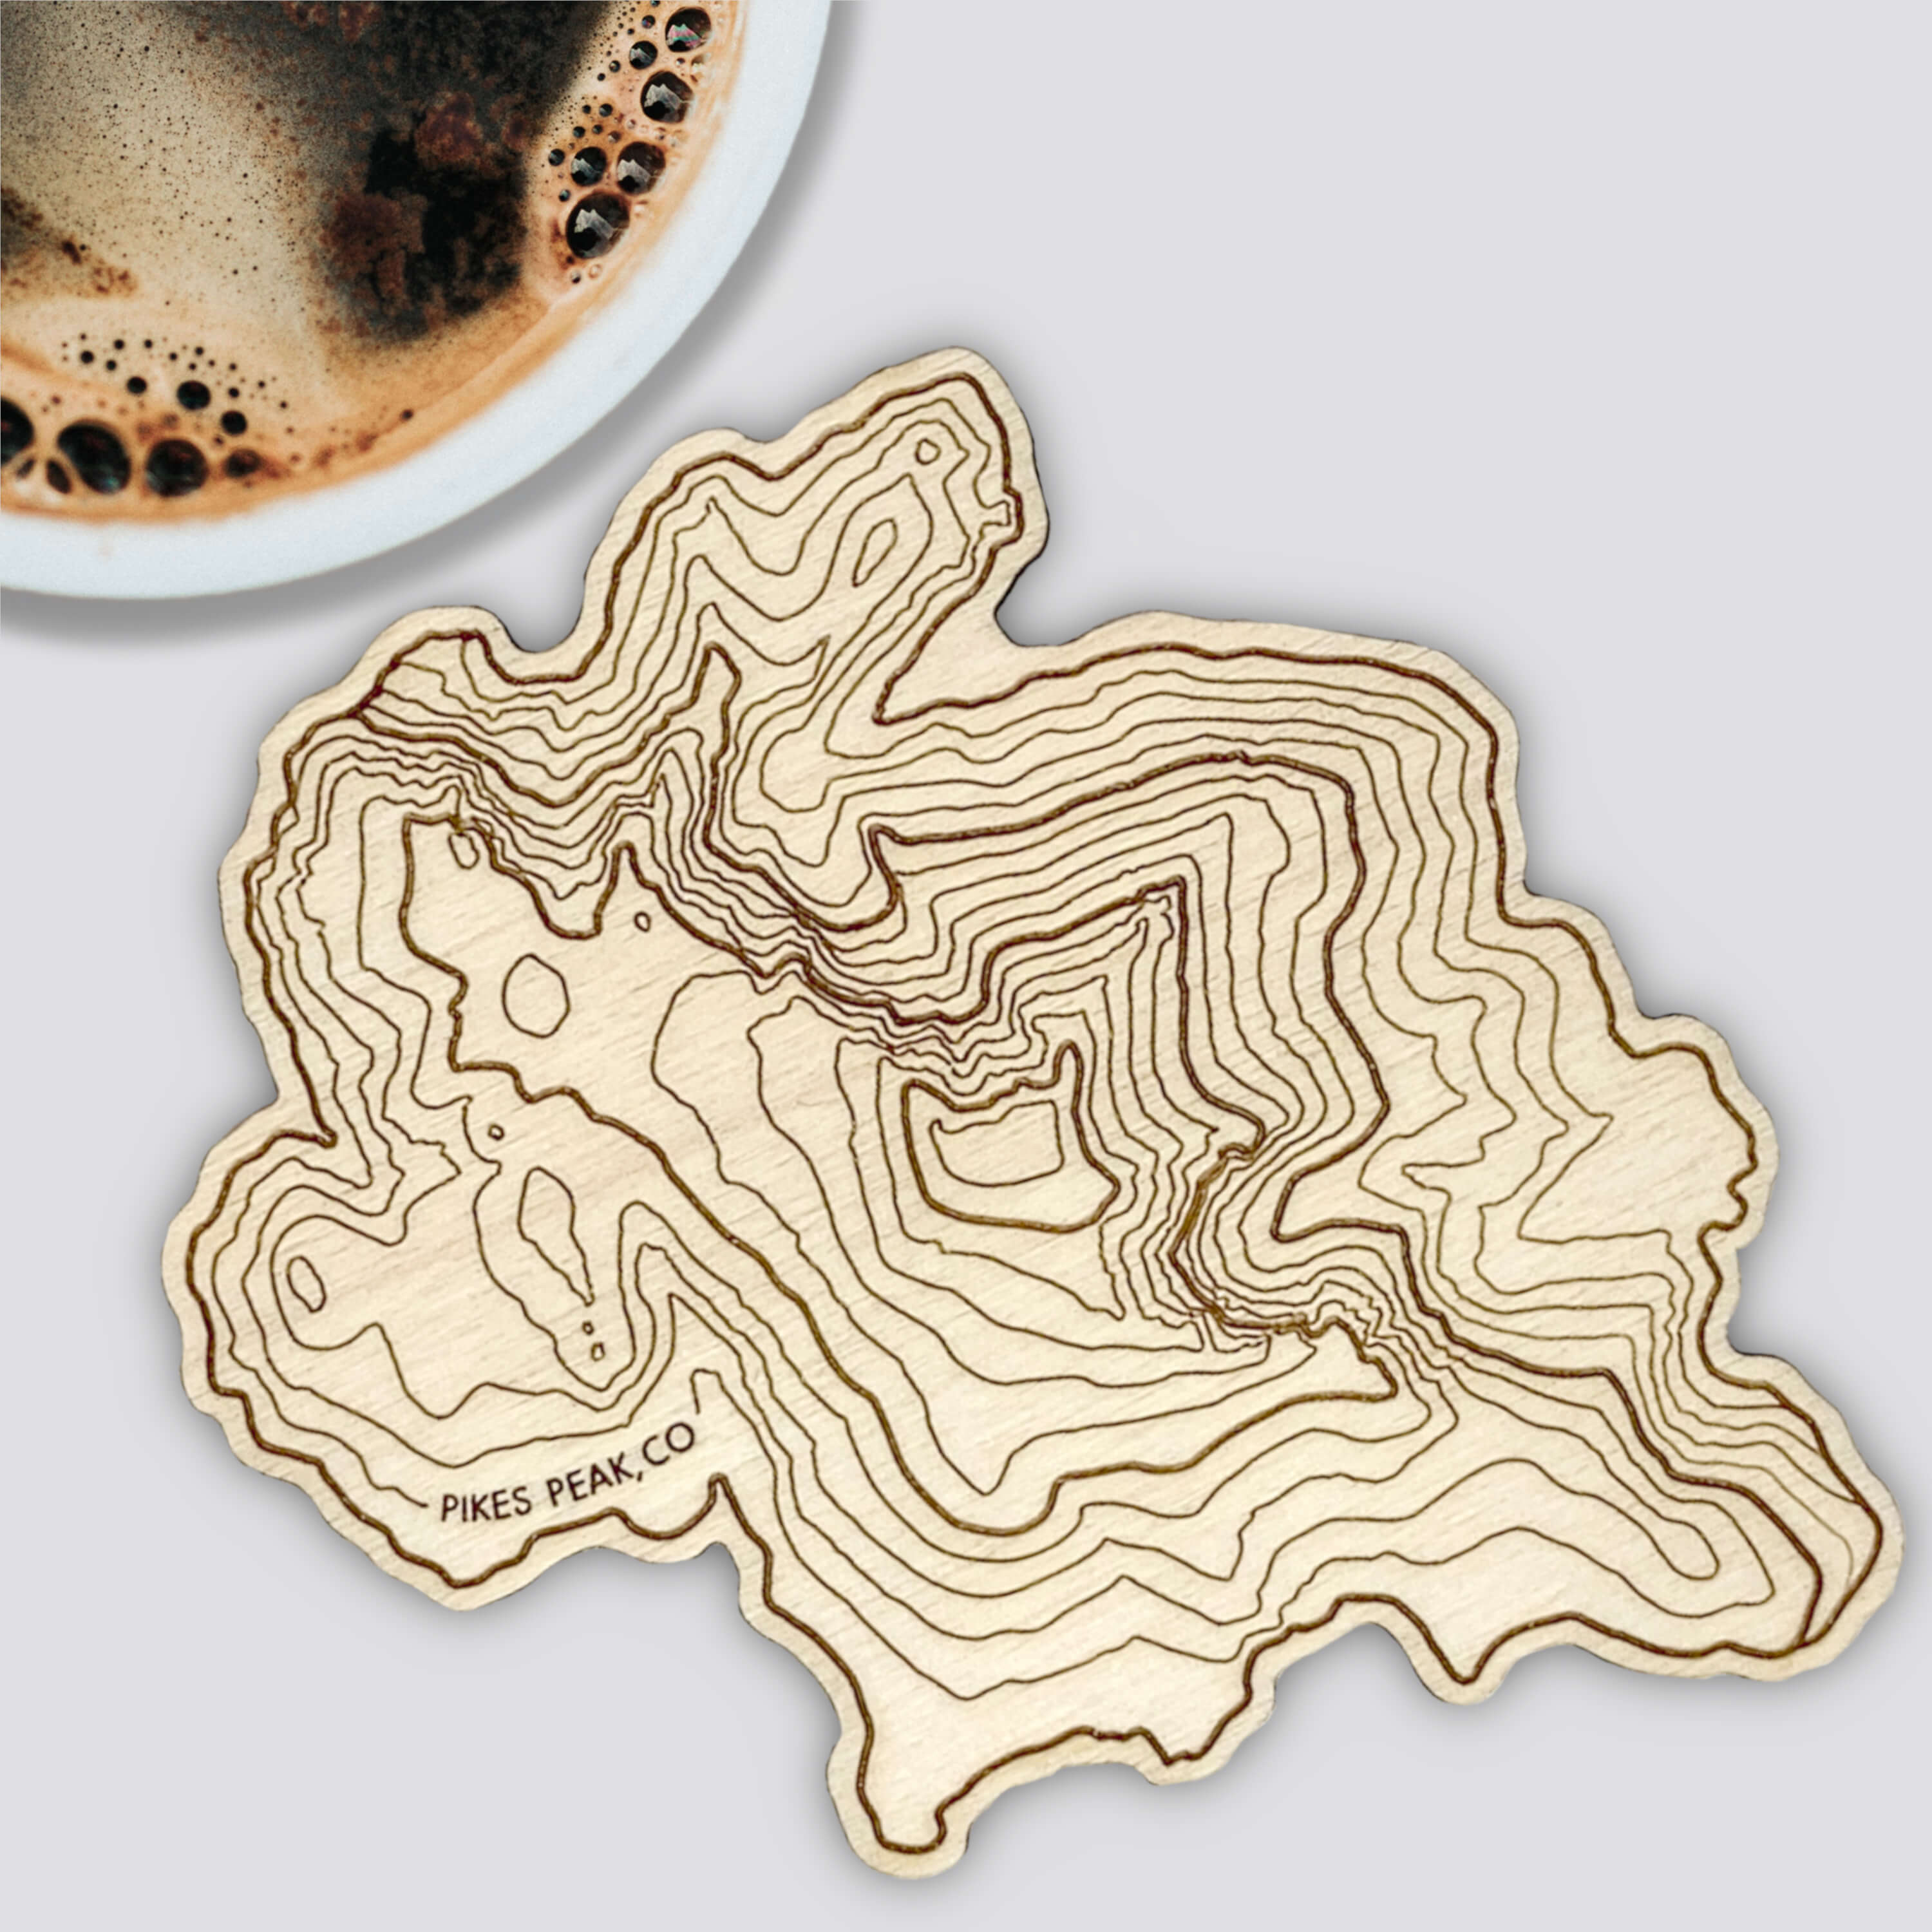 Colorado Mountains Topography Coasters - Set of 4